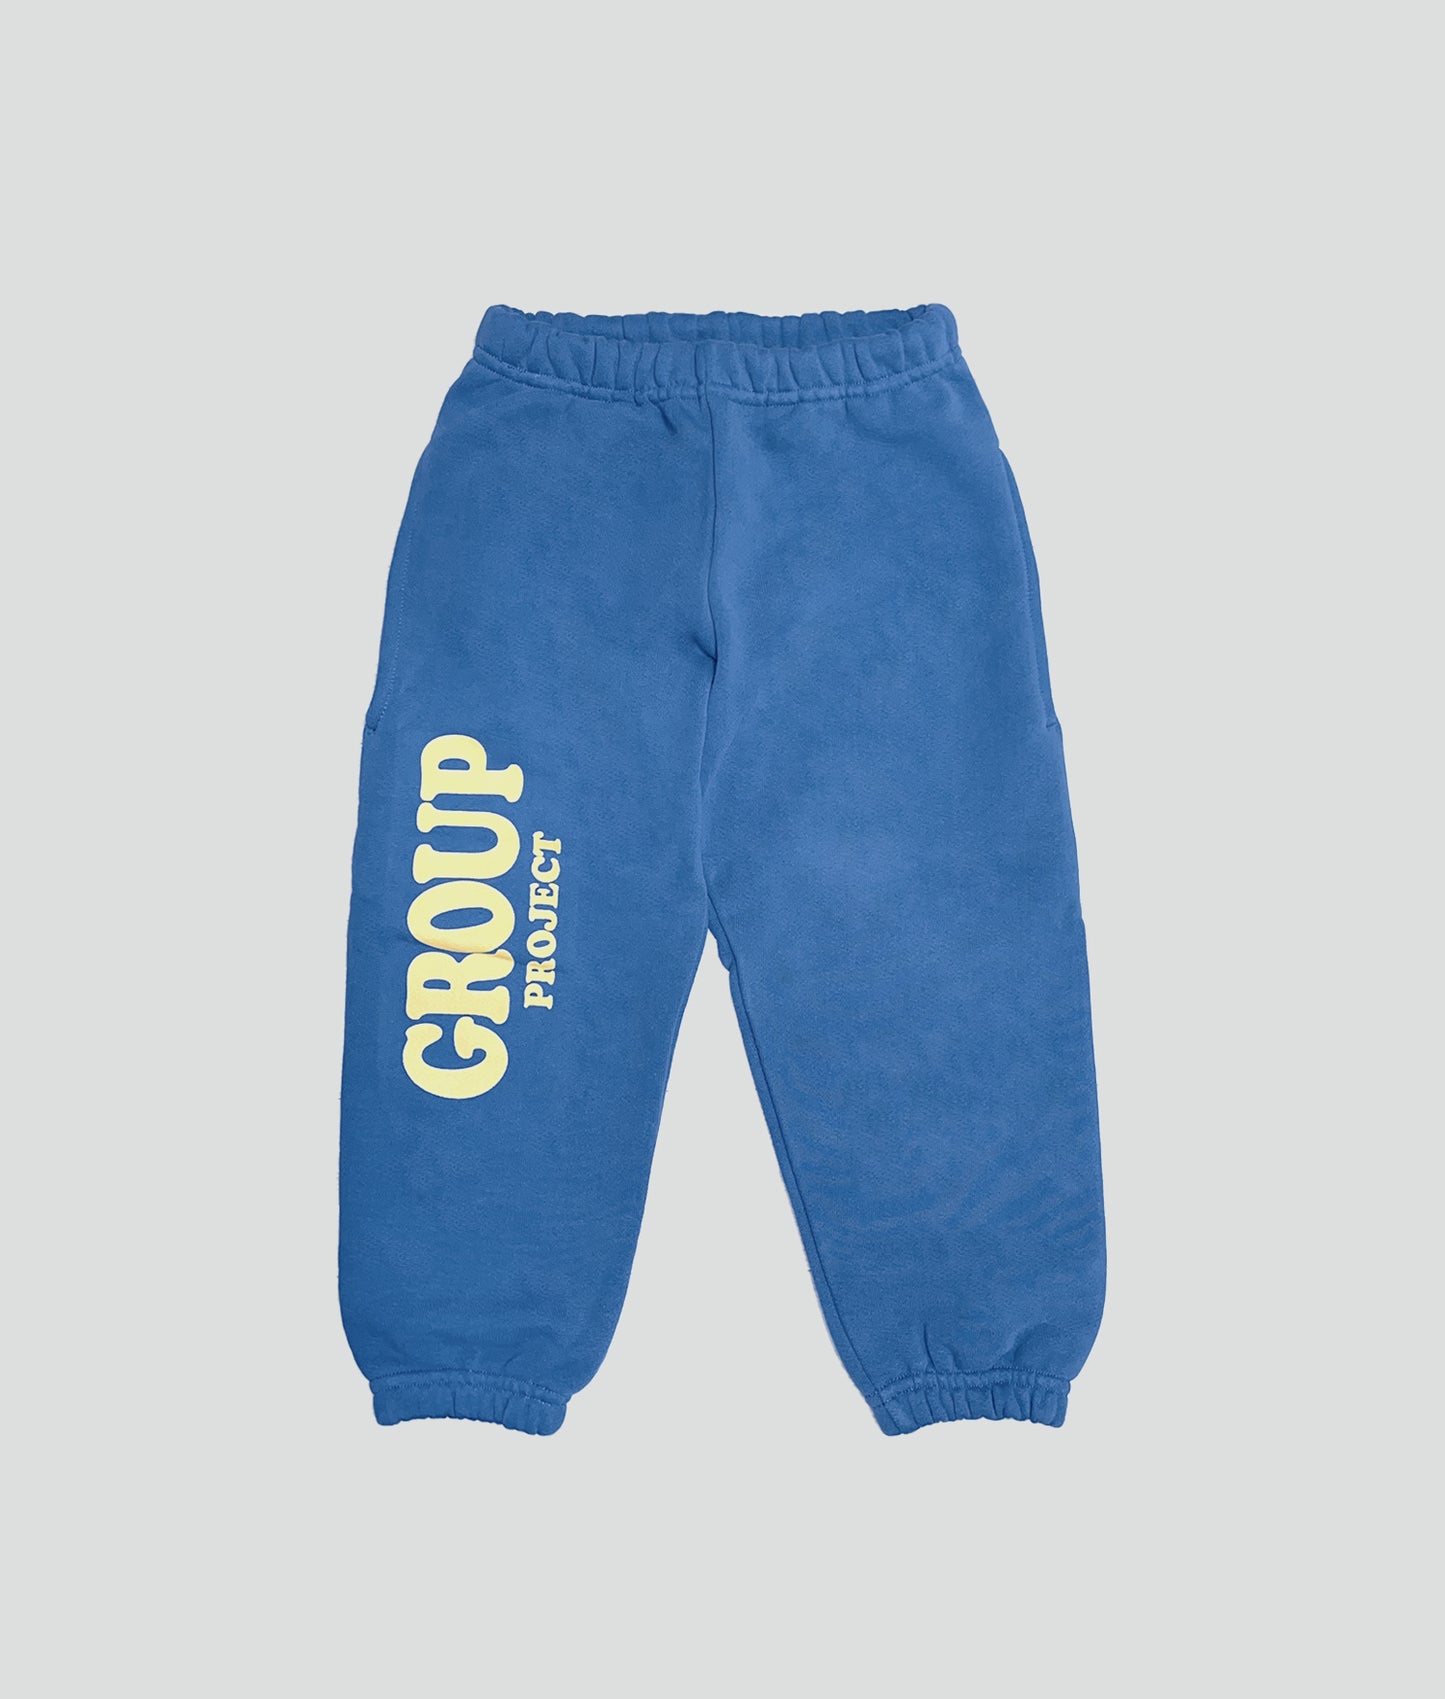 Ocean Blue Graphic Sweatpants